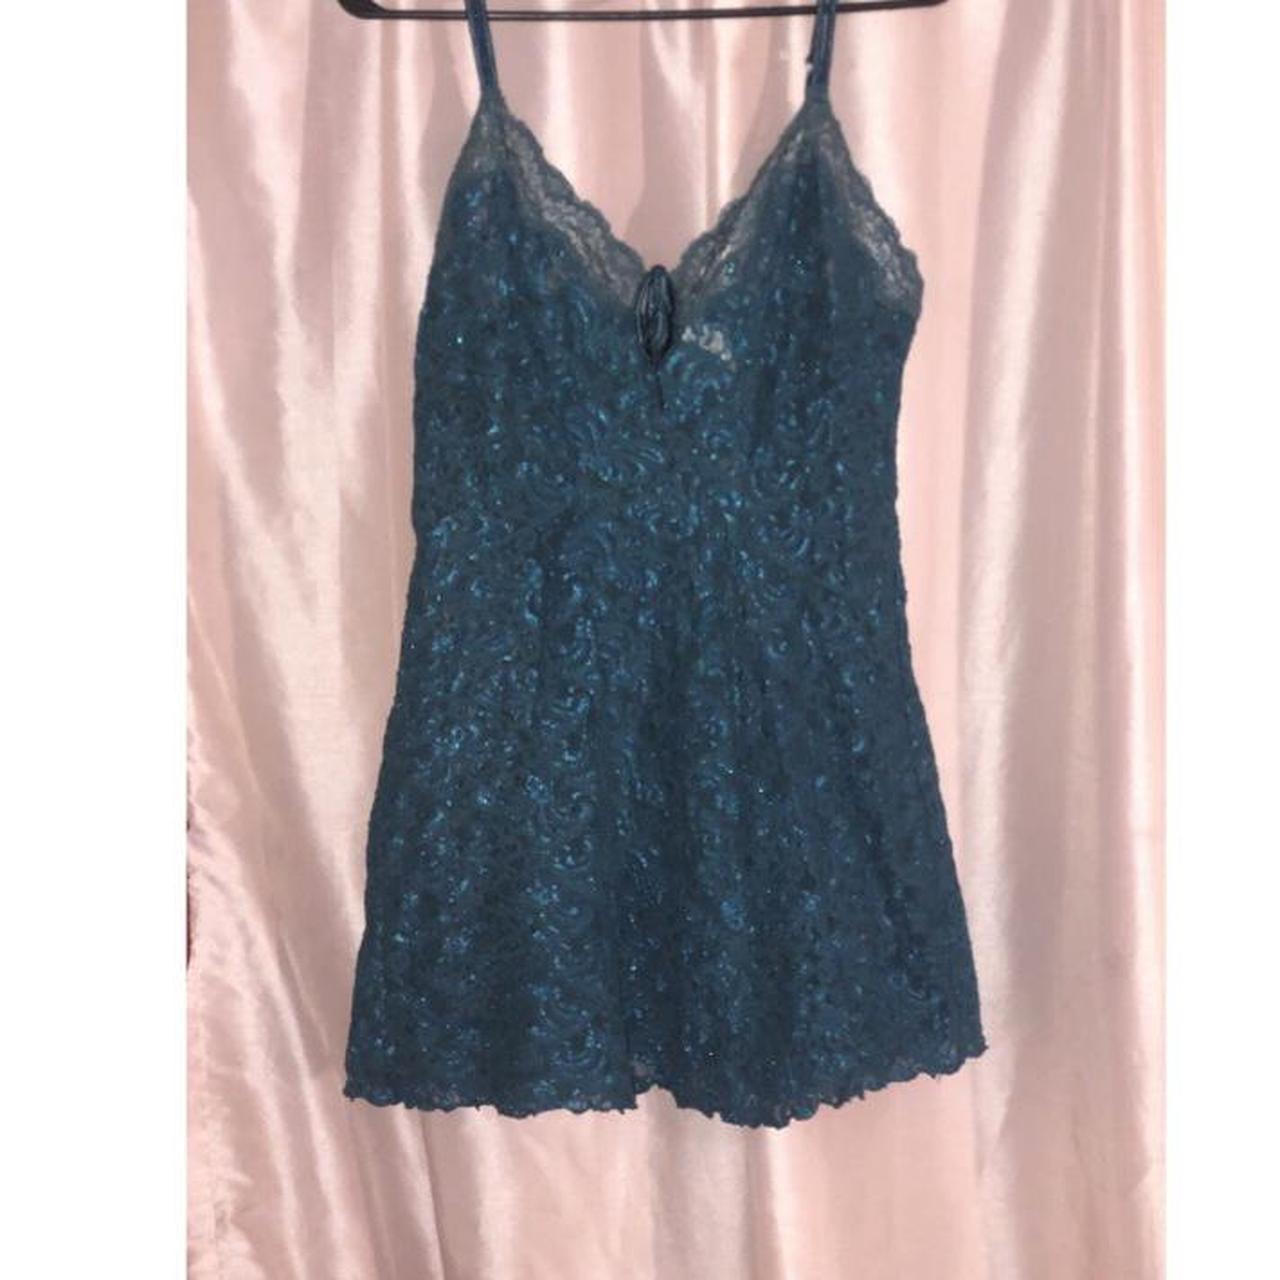 Turquoise lace vintage lingerie dress $4 shipping - Depop